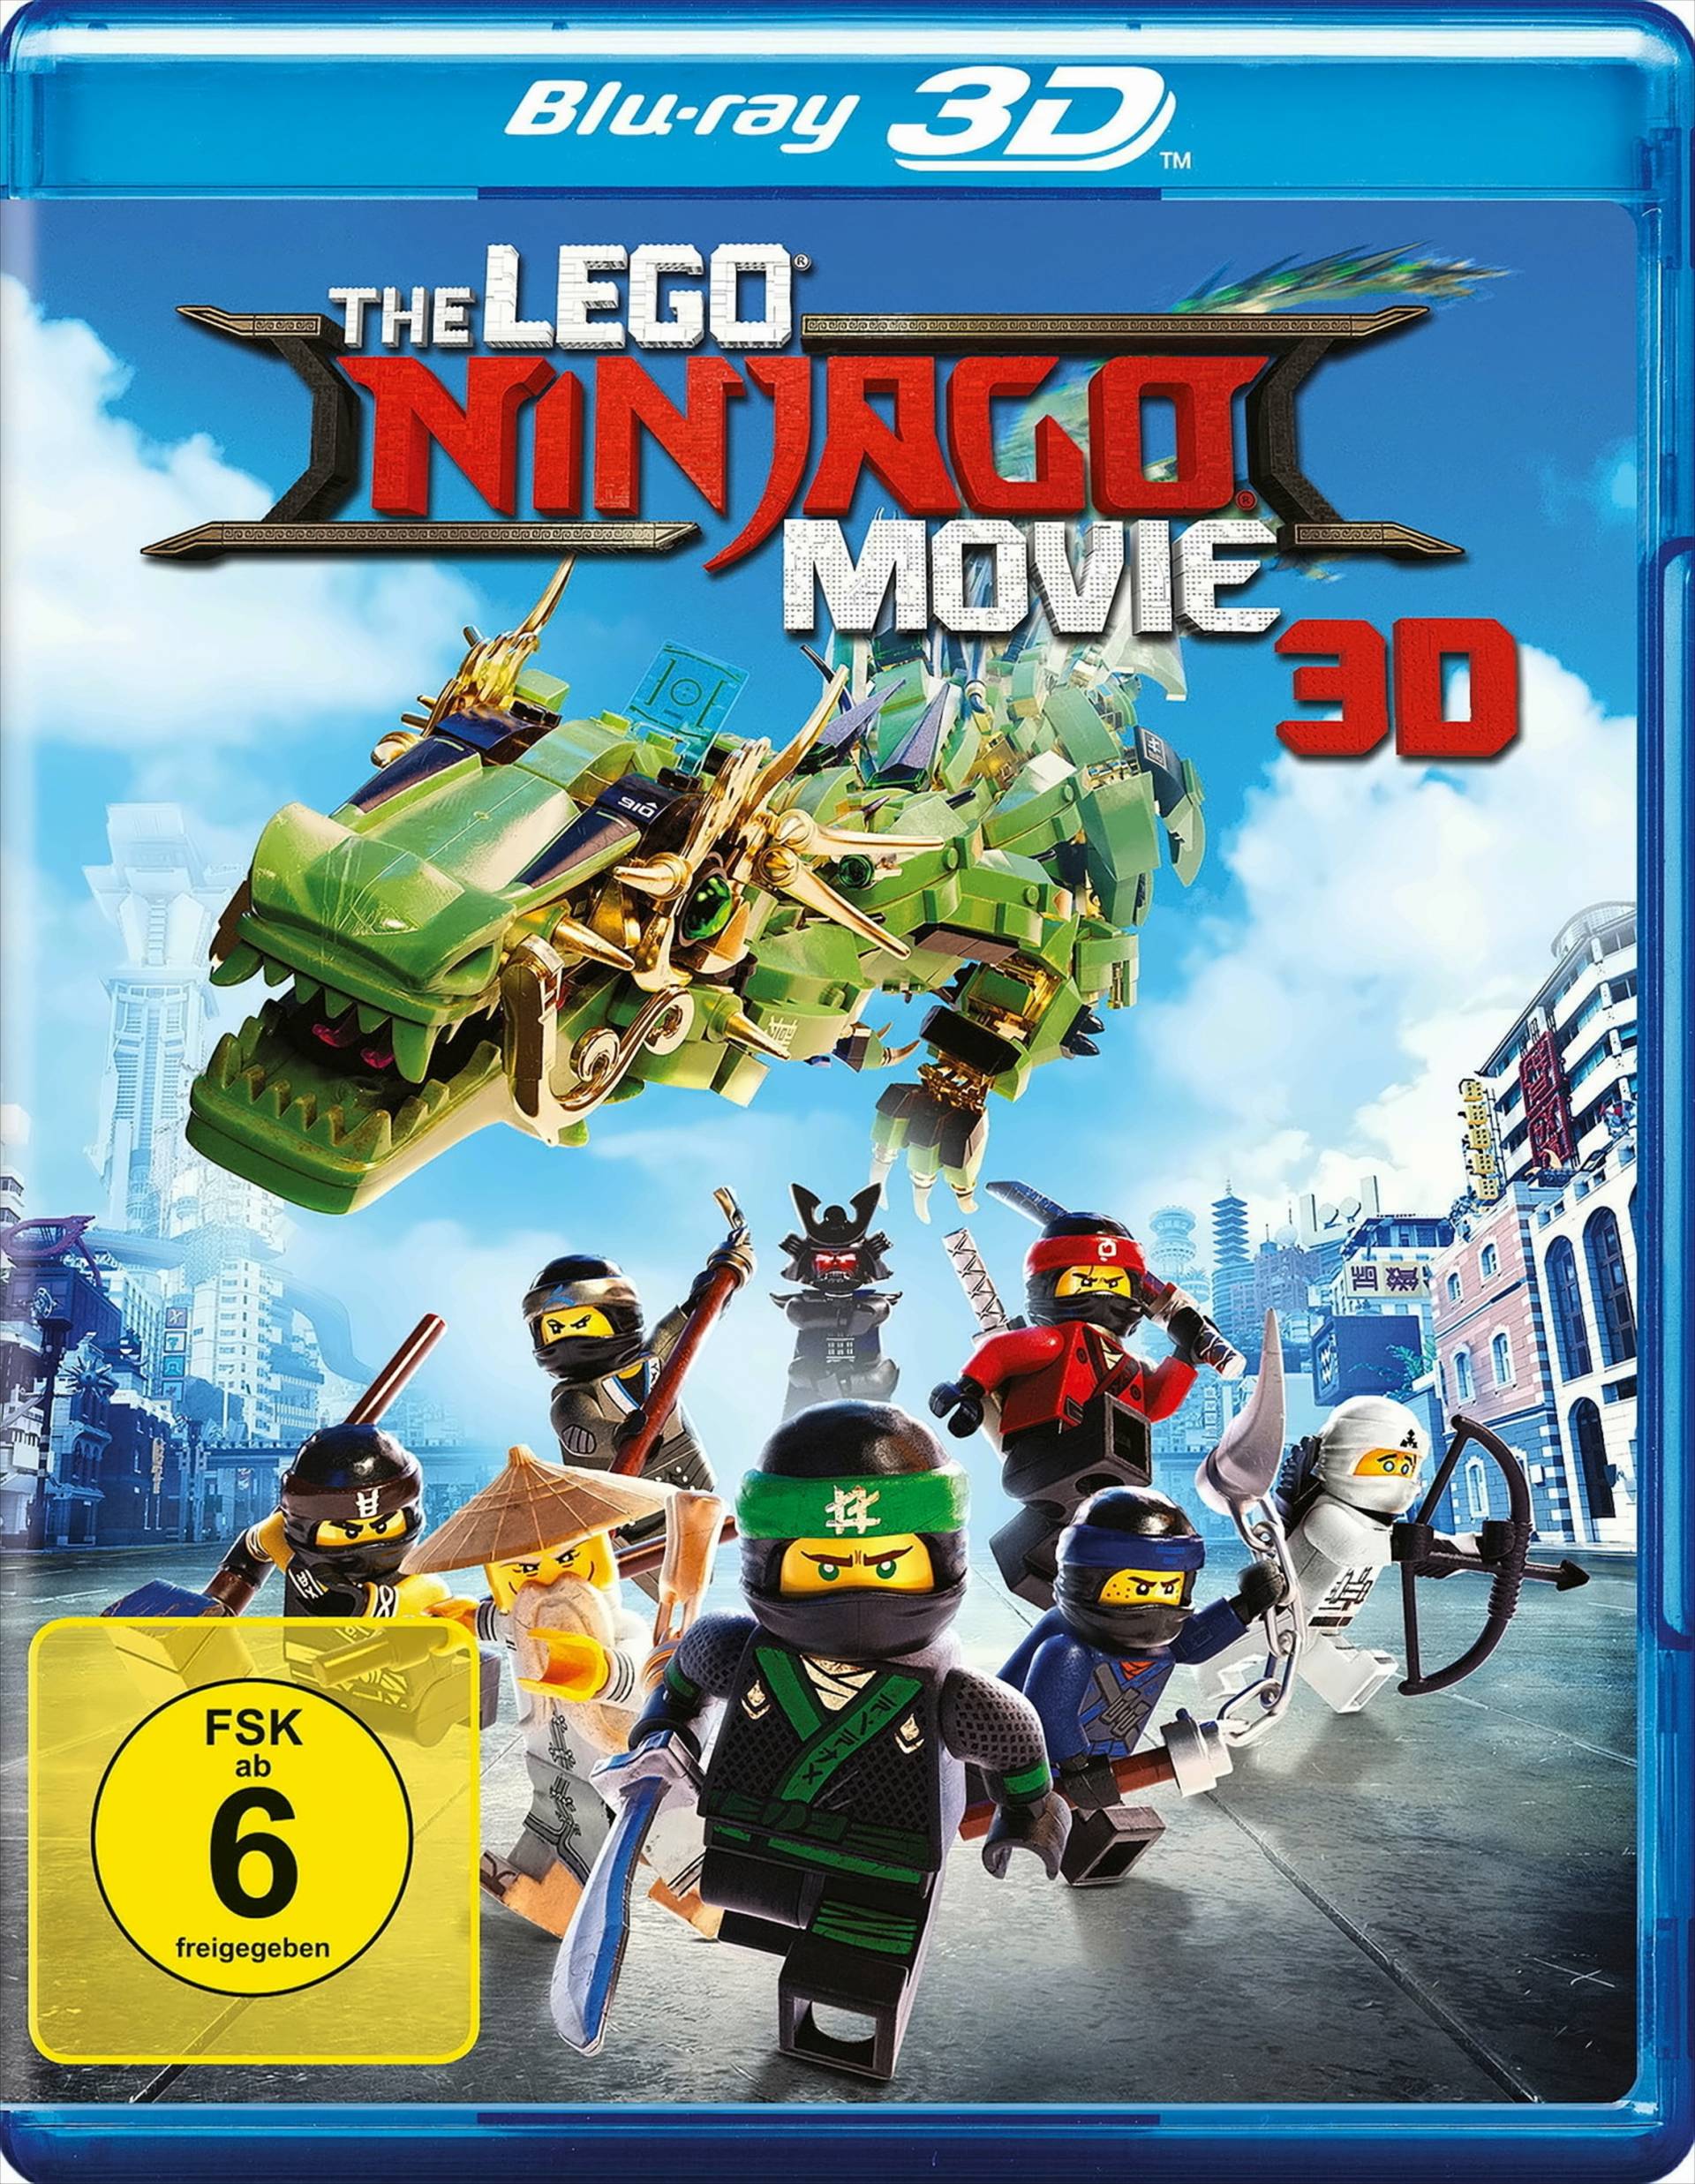 The LEGO Ninjago Movie 3D Blu Ray von Warner Home Video